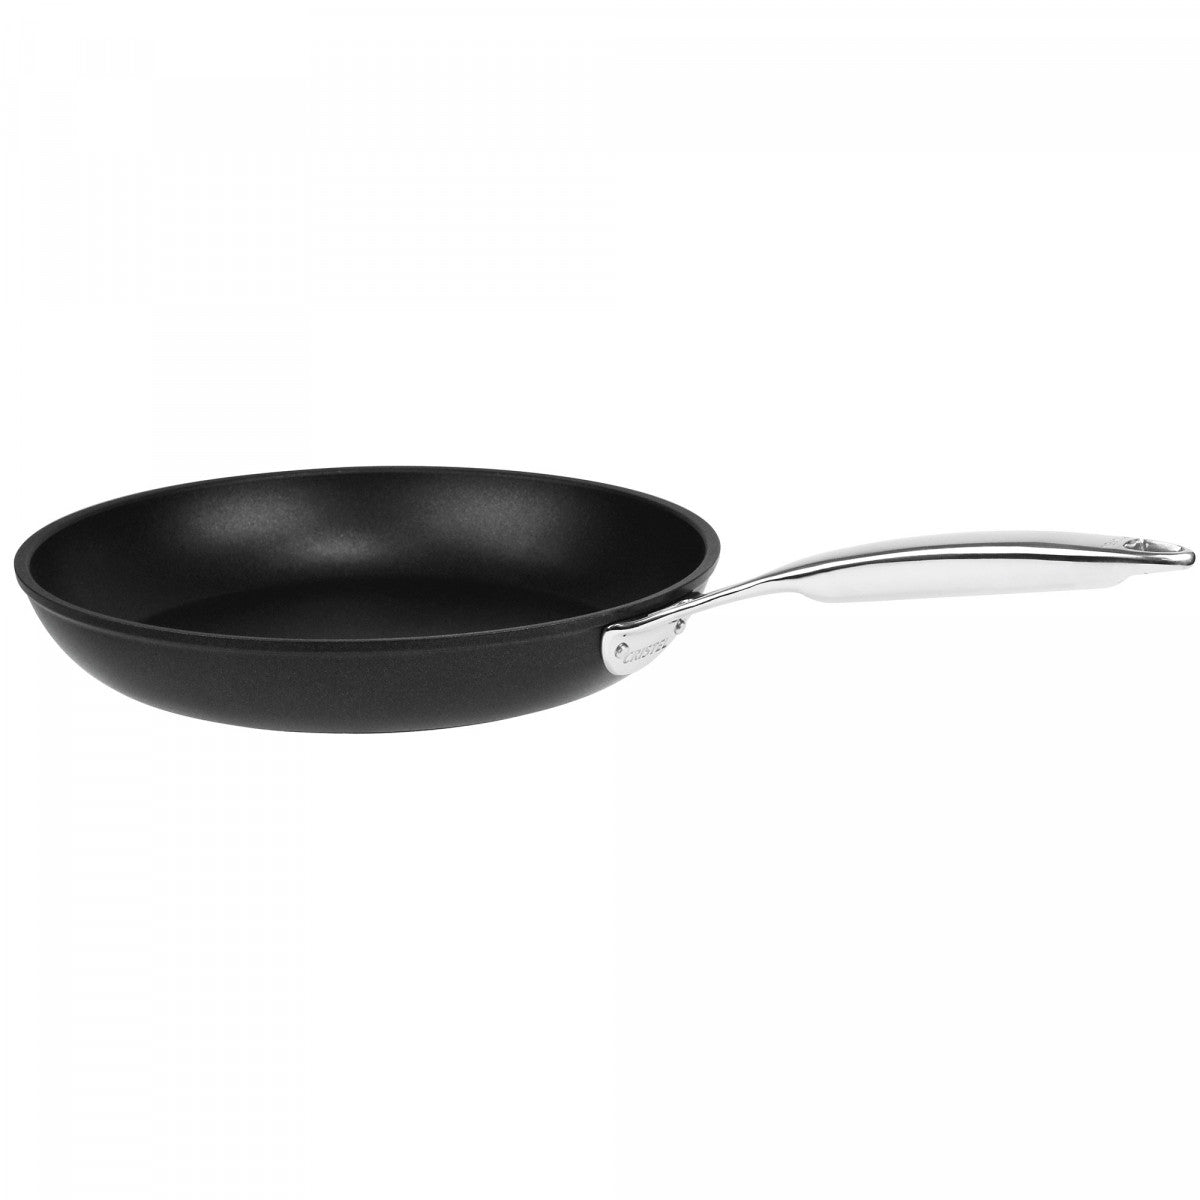 11' NON-STICK FRYING PAN W/LID (6223) 10/CS $18.29 – Universal